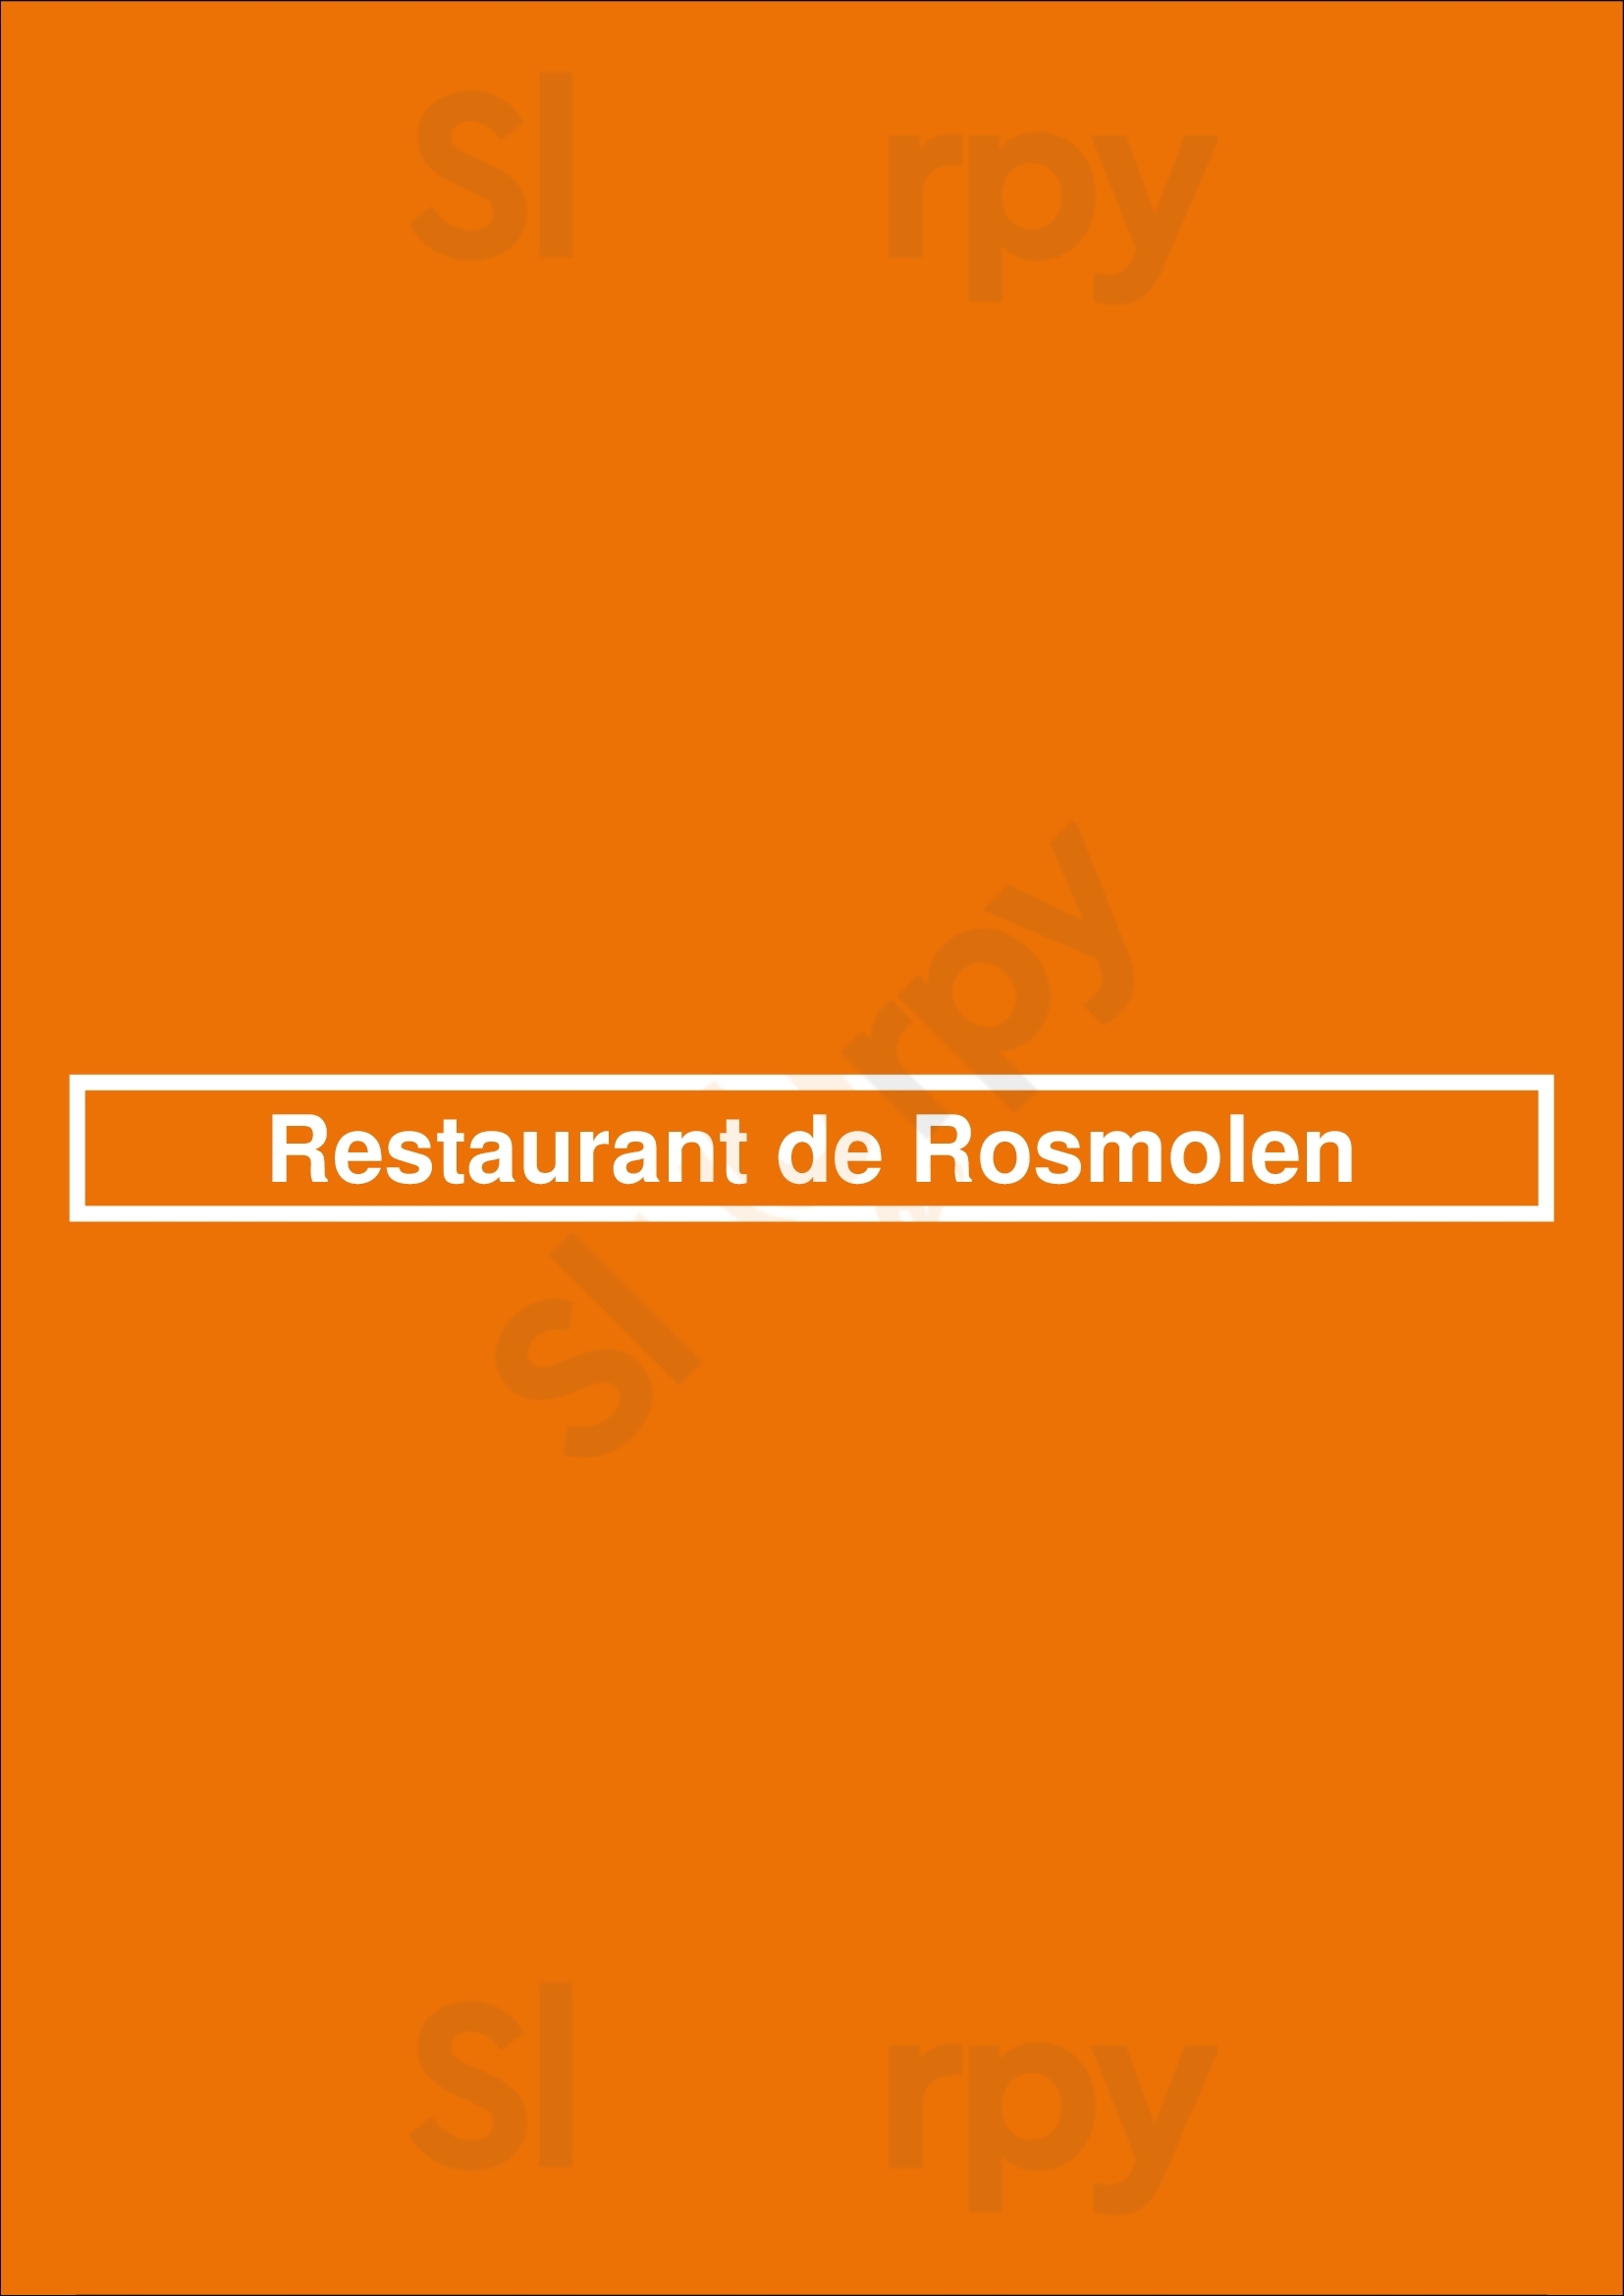 Restaurant De Rosmolen Willemstad Menu - 1